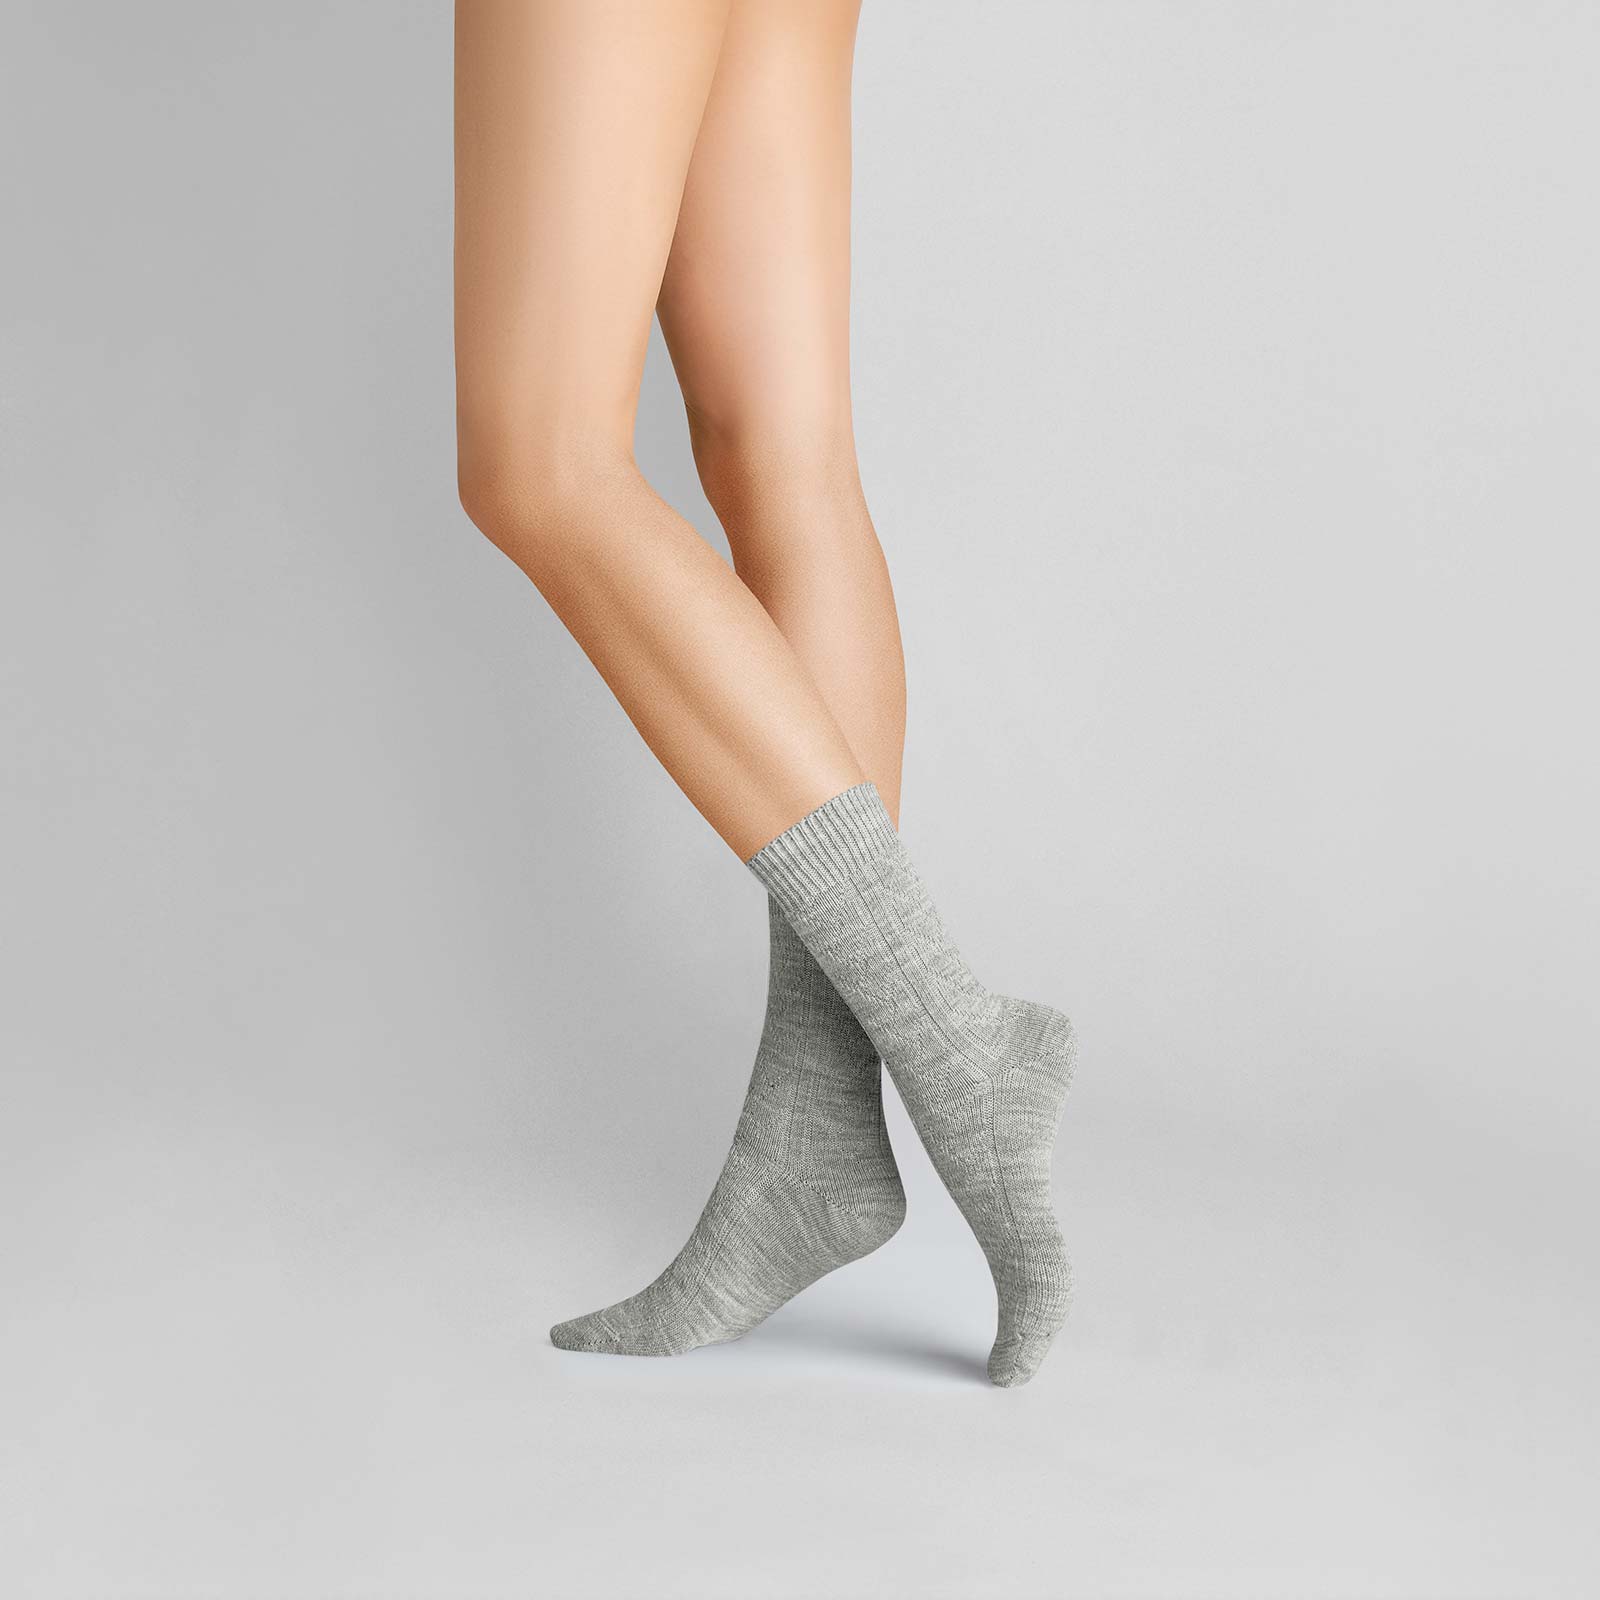 HUDSON Damen SNUG -  39/42 - Damen Socken mit klassischer Zopf-Musterung - Silber (Grau)